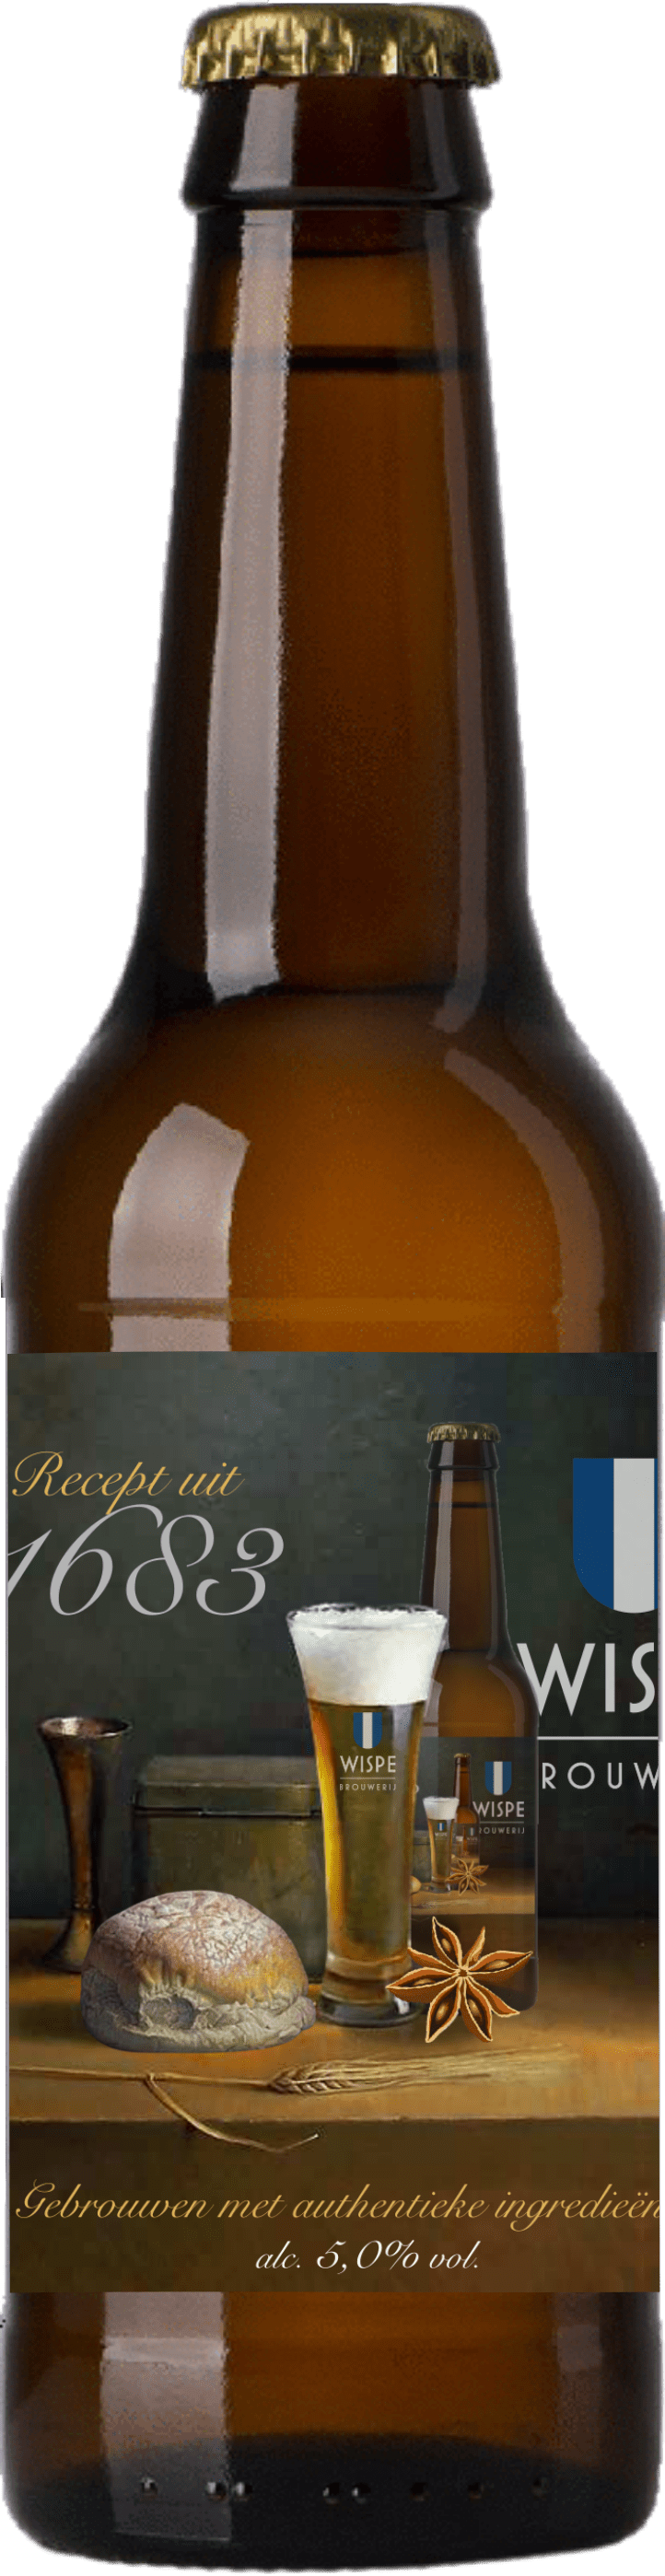 Wispe 1683